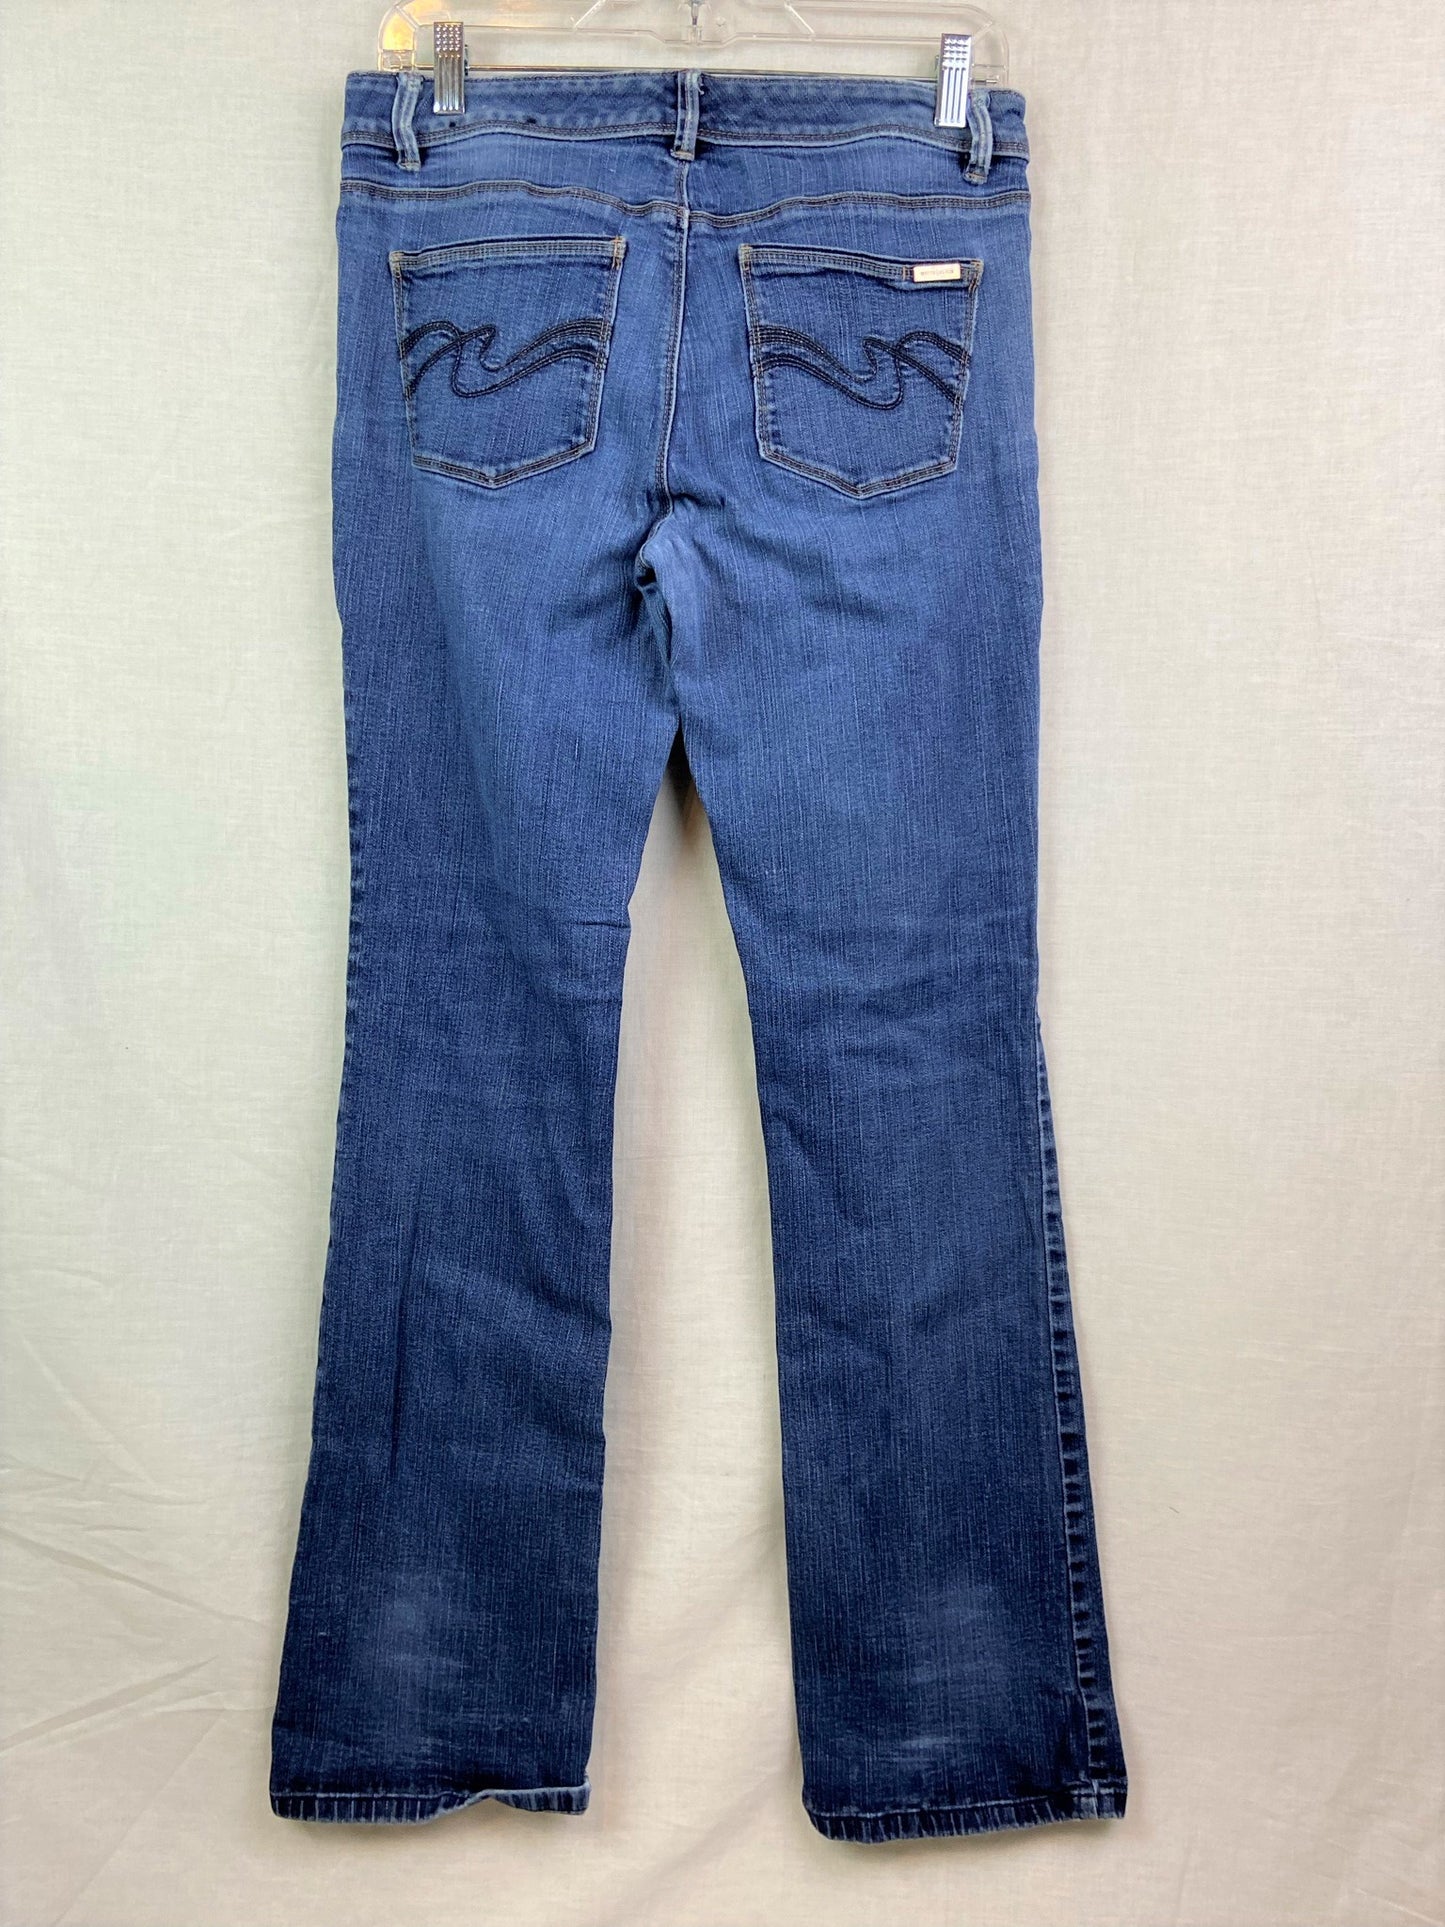 White House Black Market Distressed Faded Blue Denim Jeans